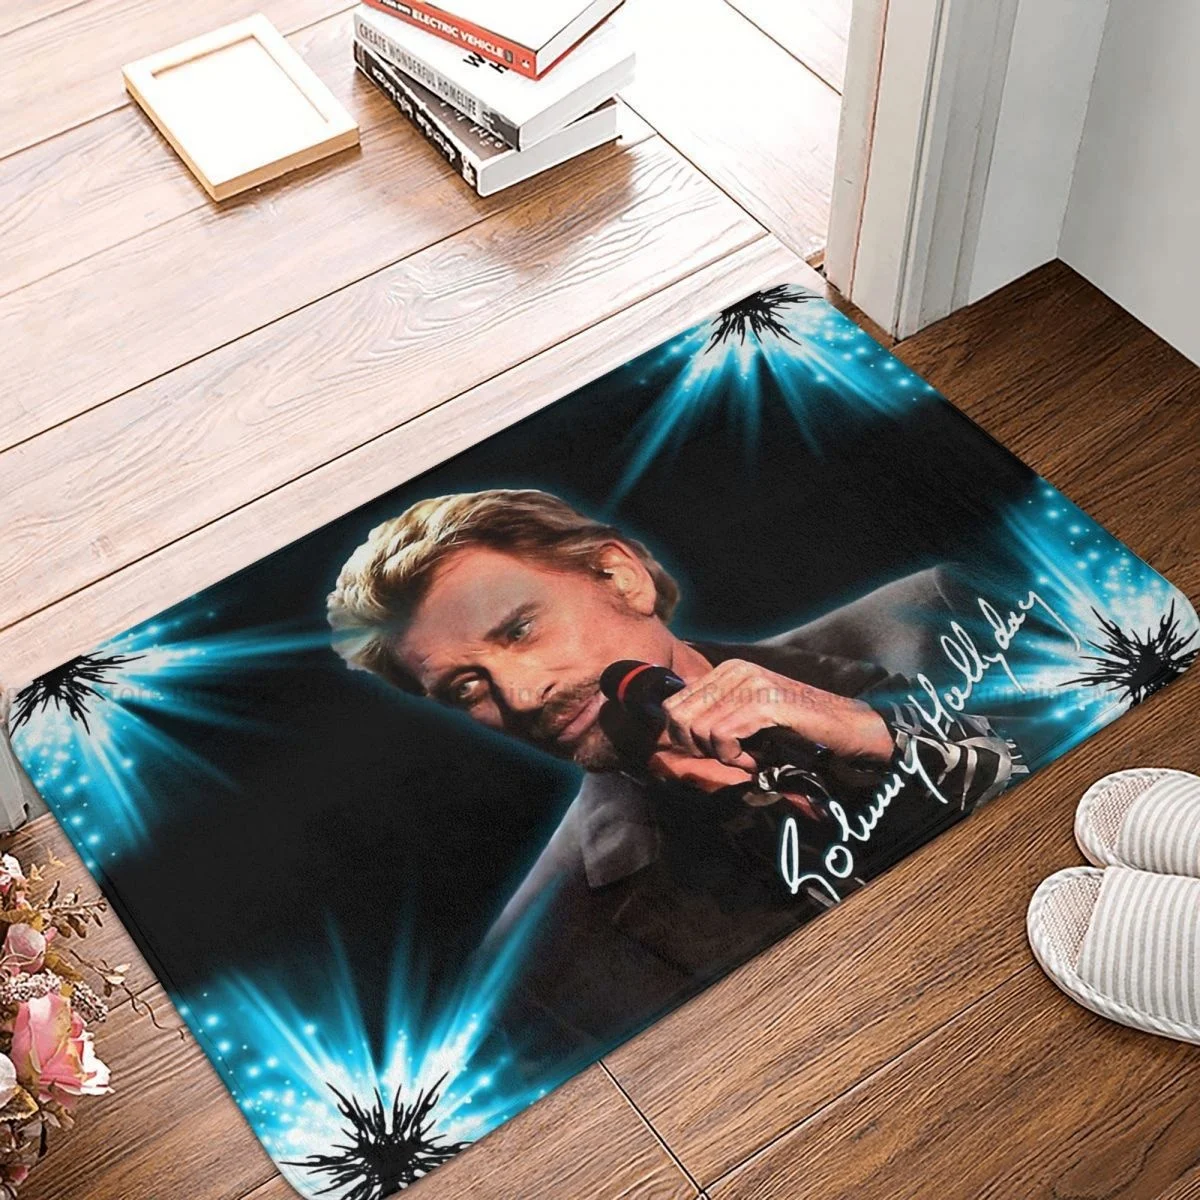 

Johnny Hallyday Rock Music French Singer Kitchen Non-Slip Carpet Tribute Living Room Mat Entrance Door Doormat Home Decor Rug